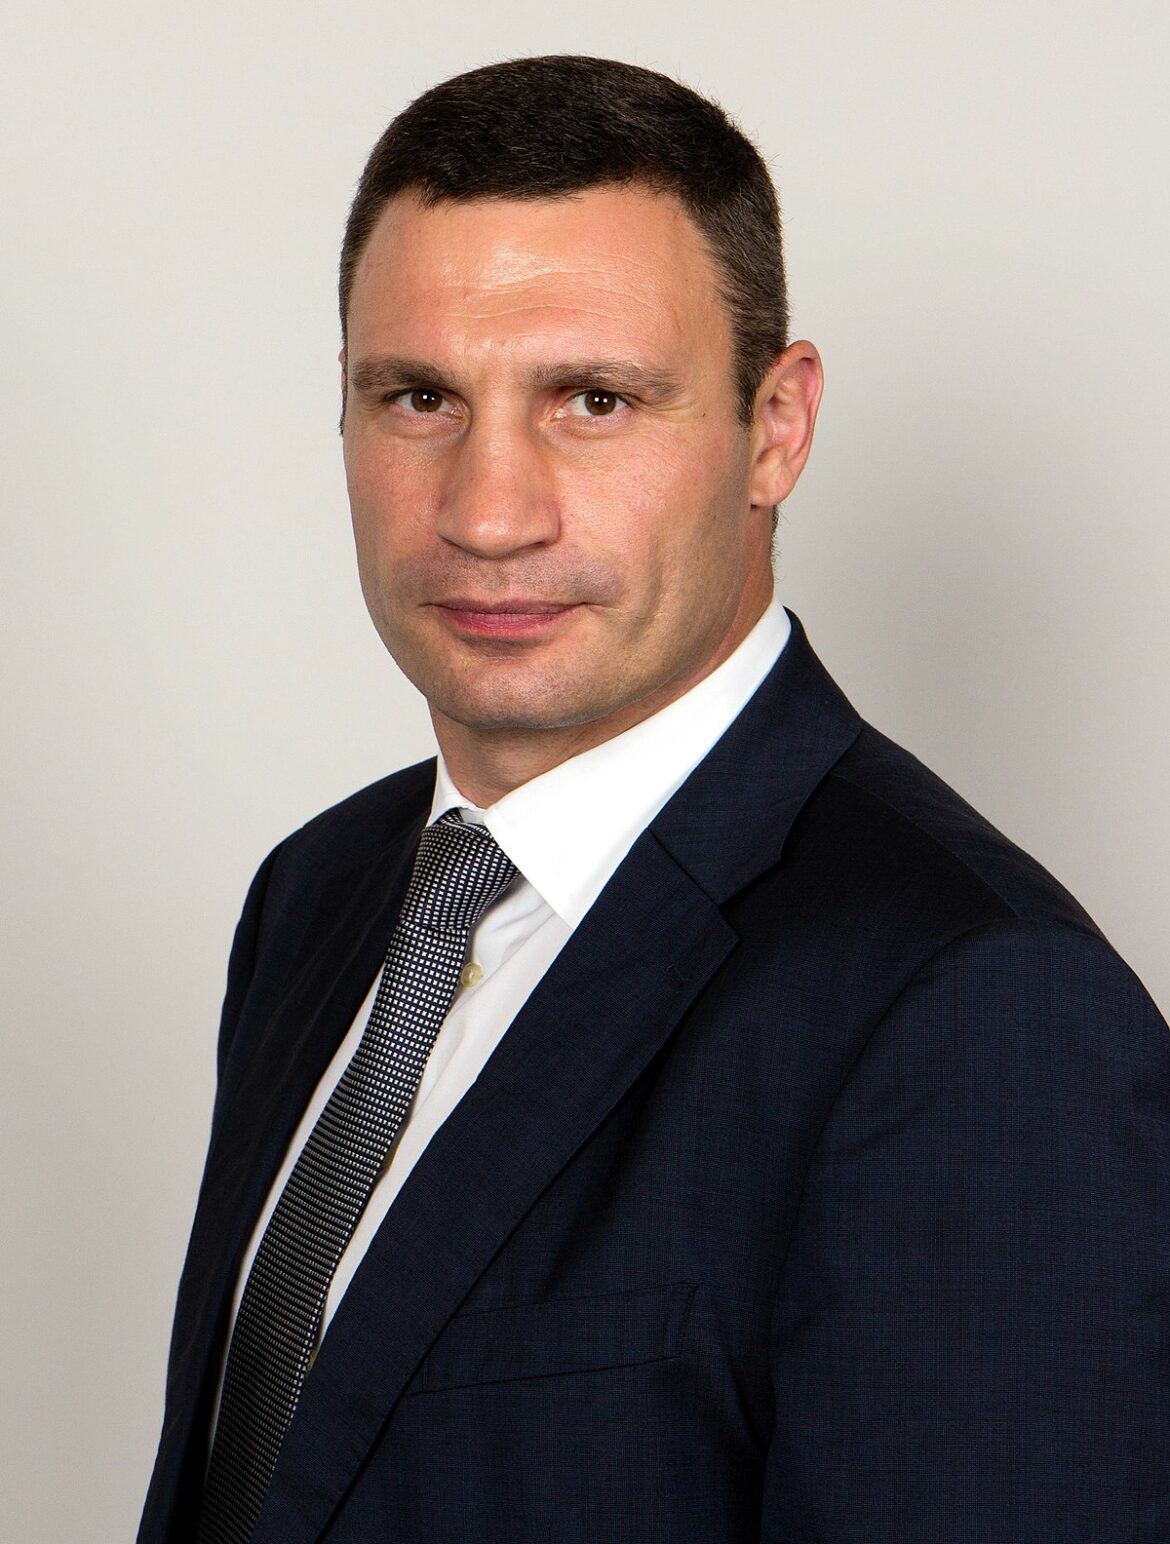 Vitali Klitschko assets